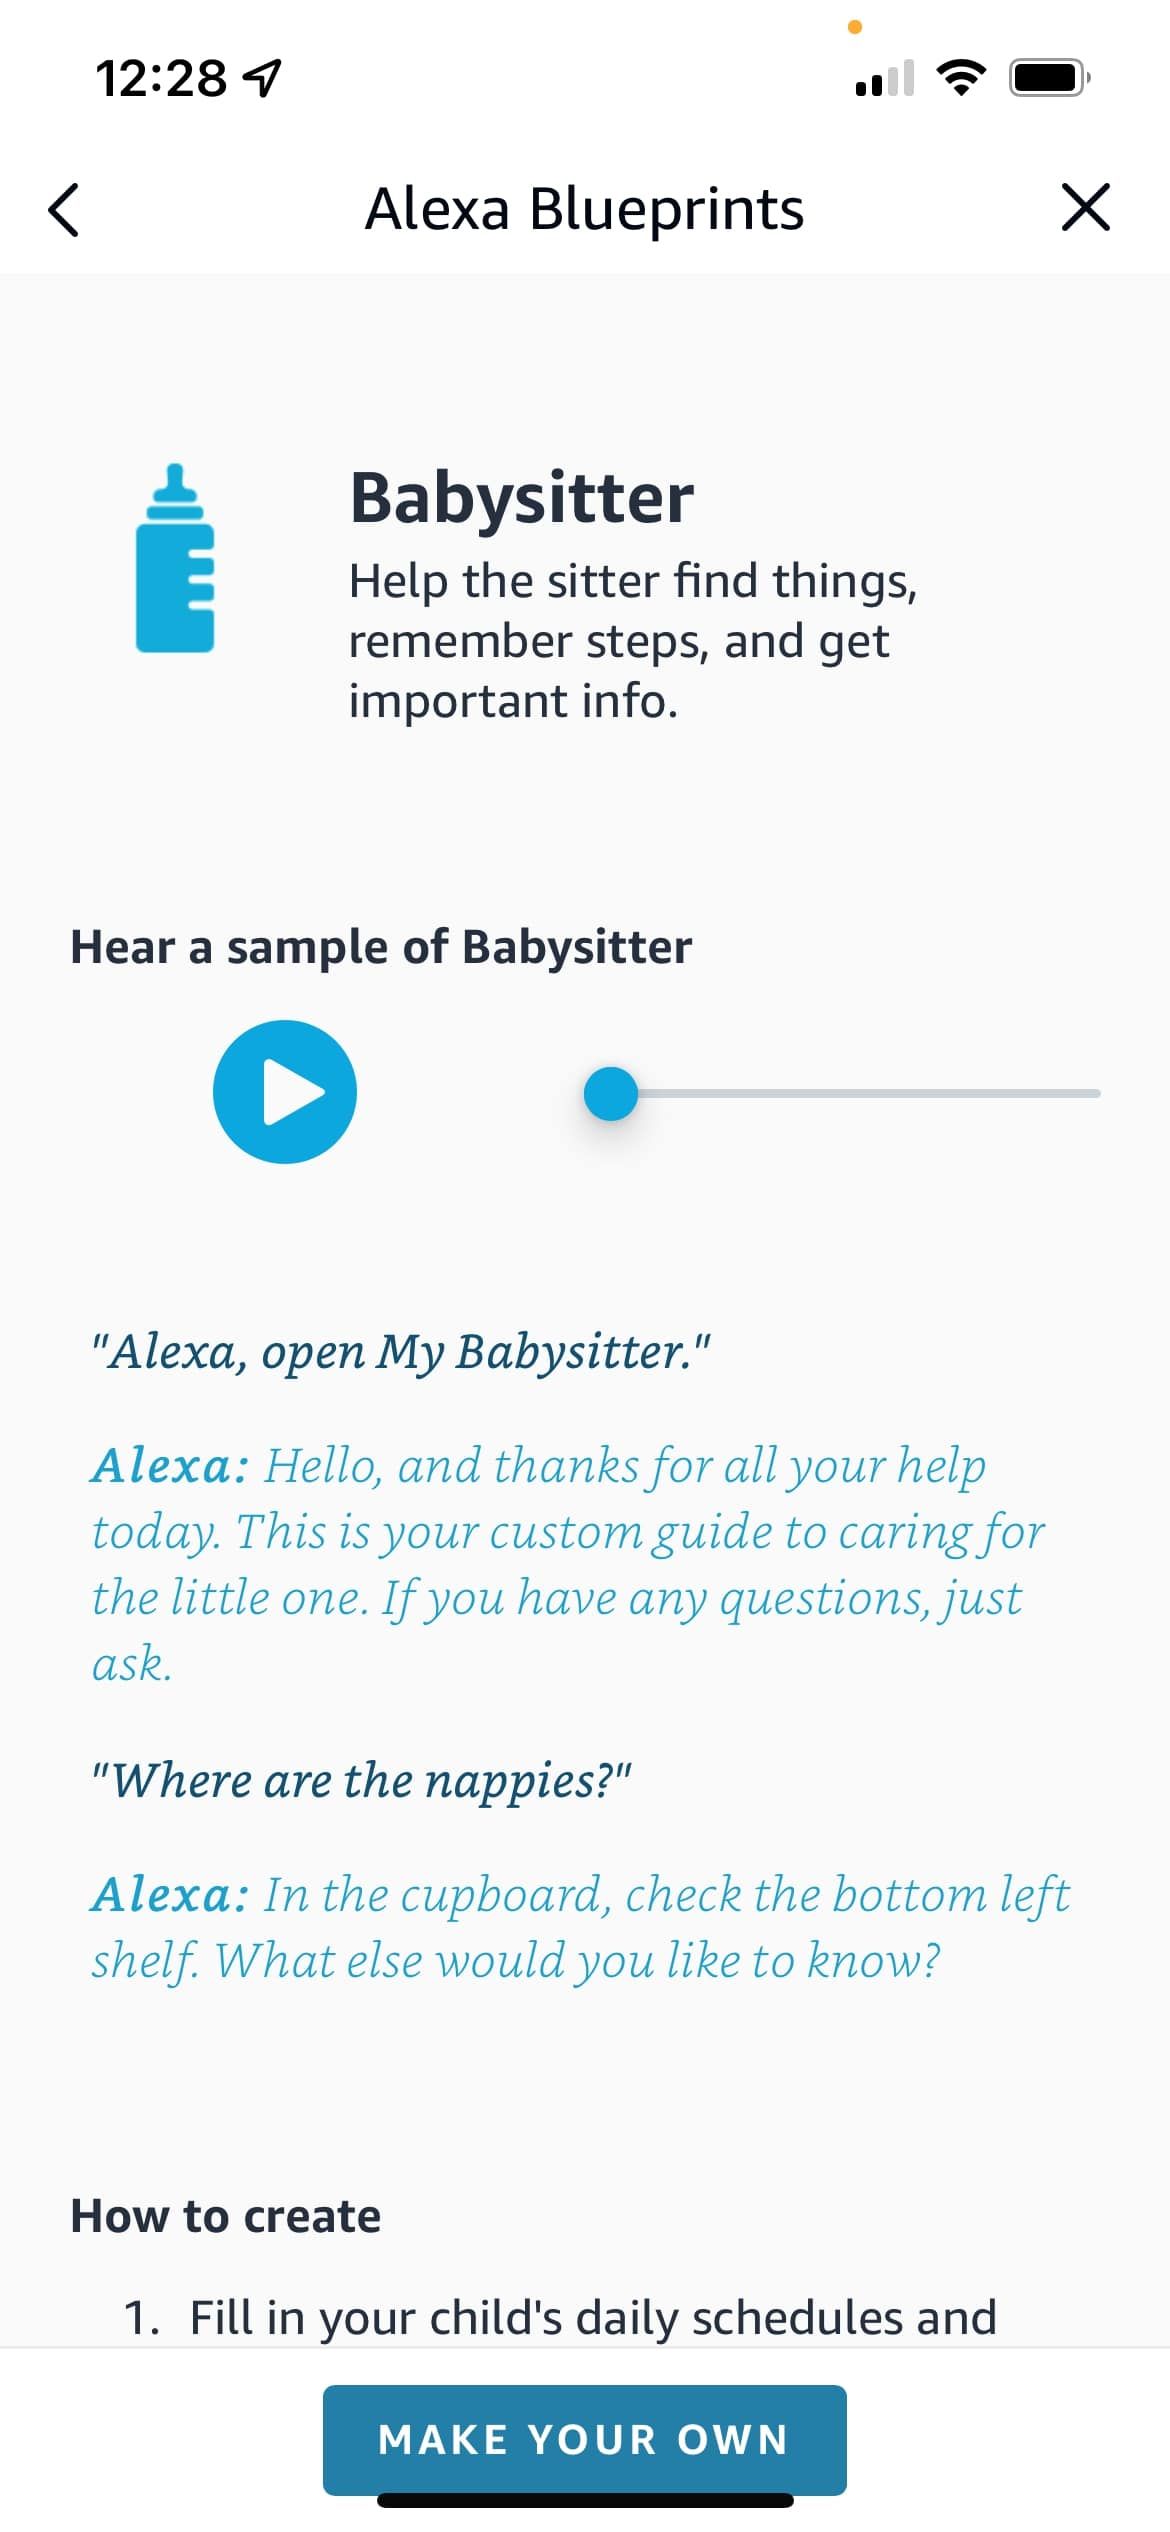 Babysitter Blueprint main page